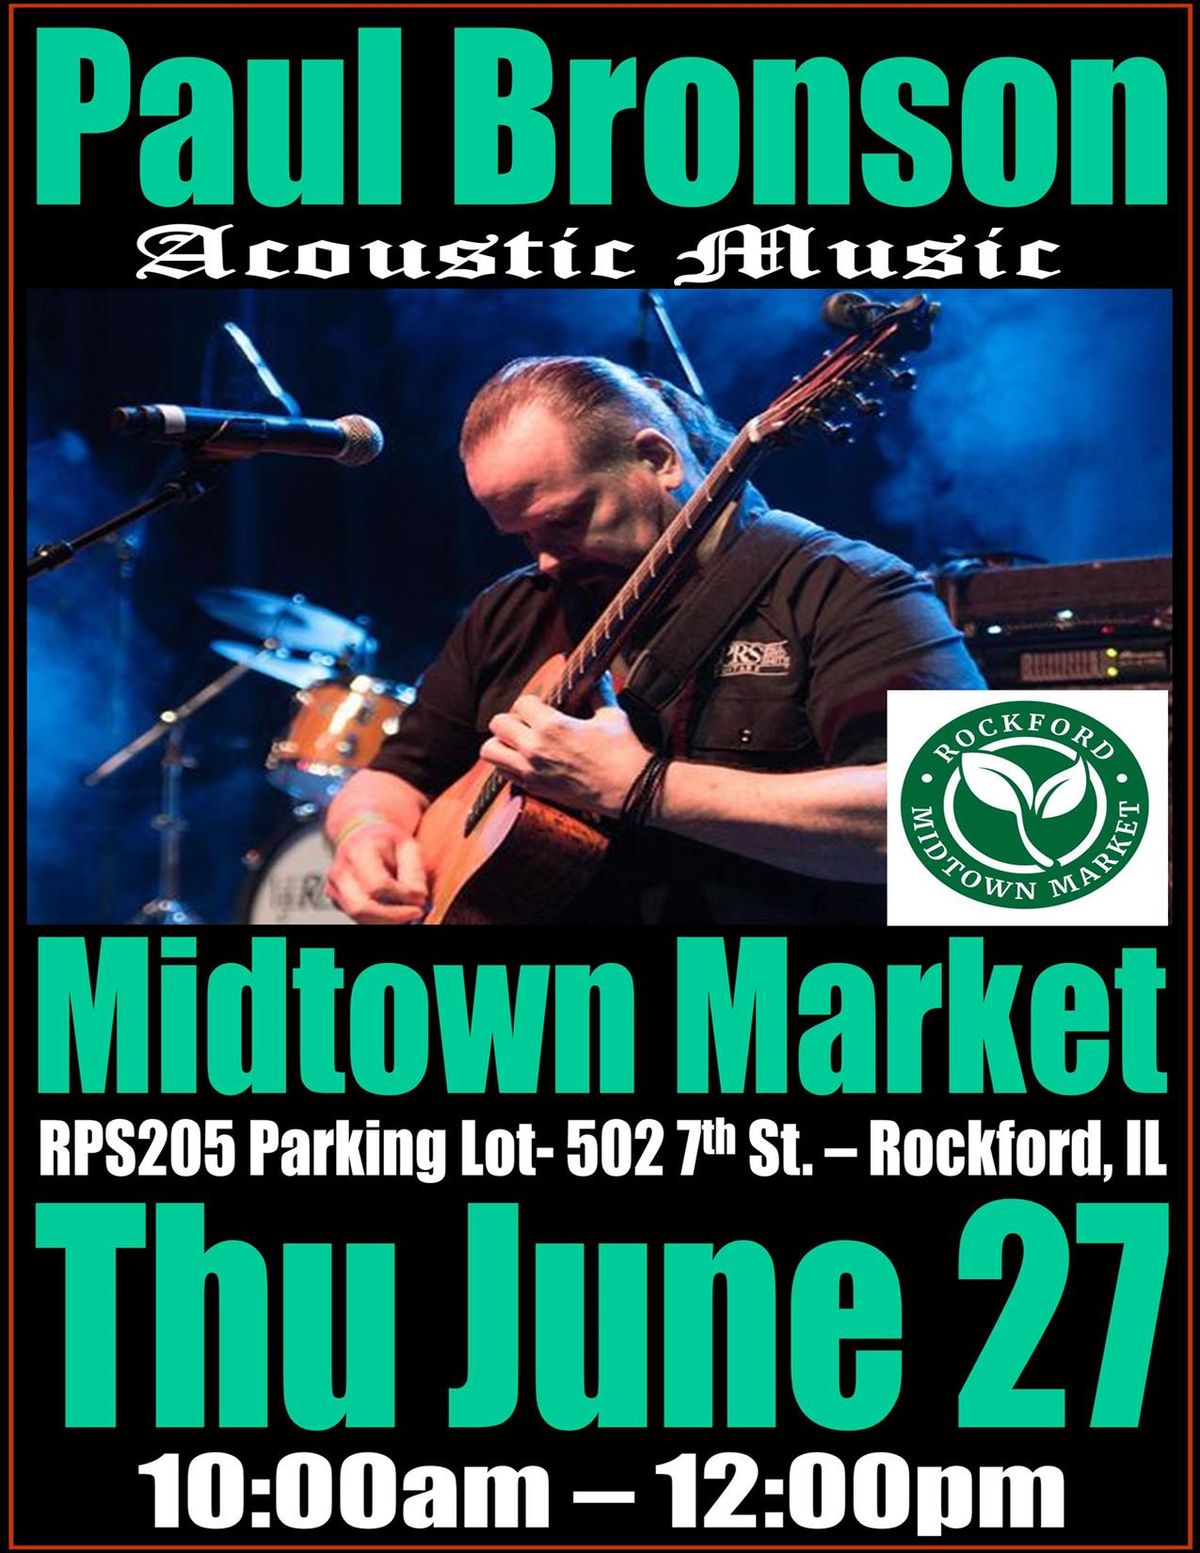 Paul Bronson Acoustic Music @ Rockford Midtown Market - Thursday, June 27th